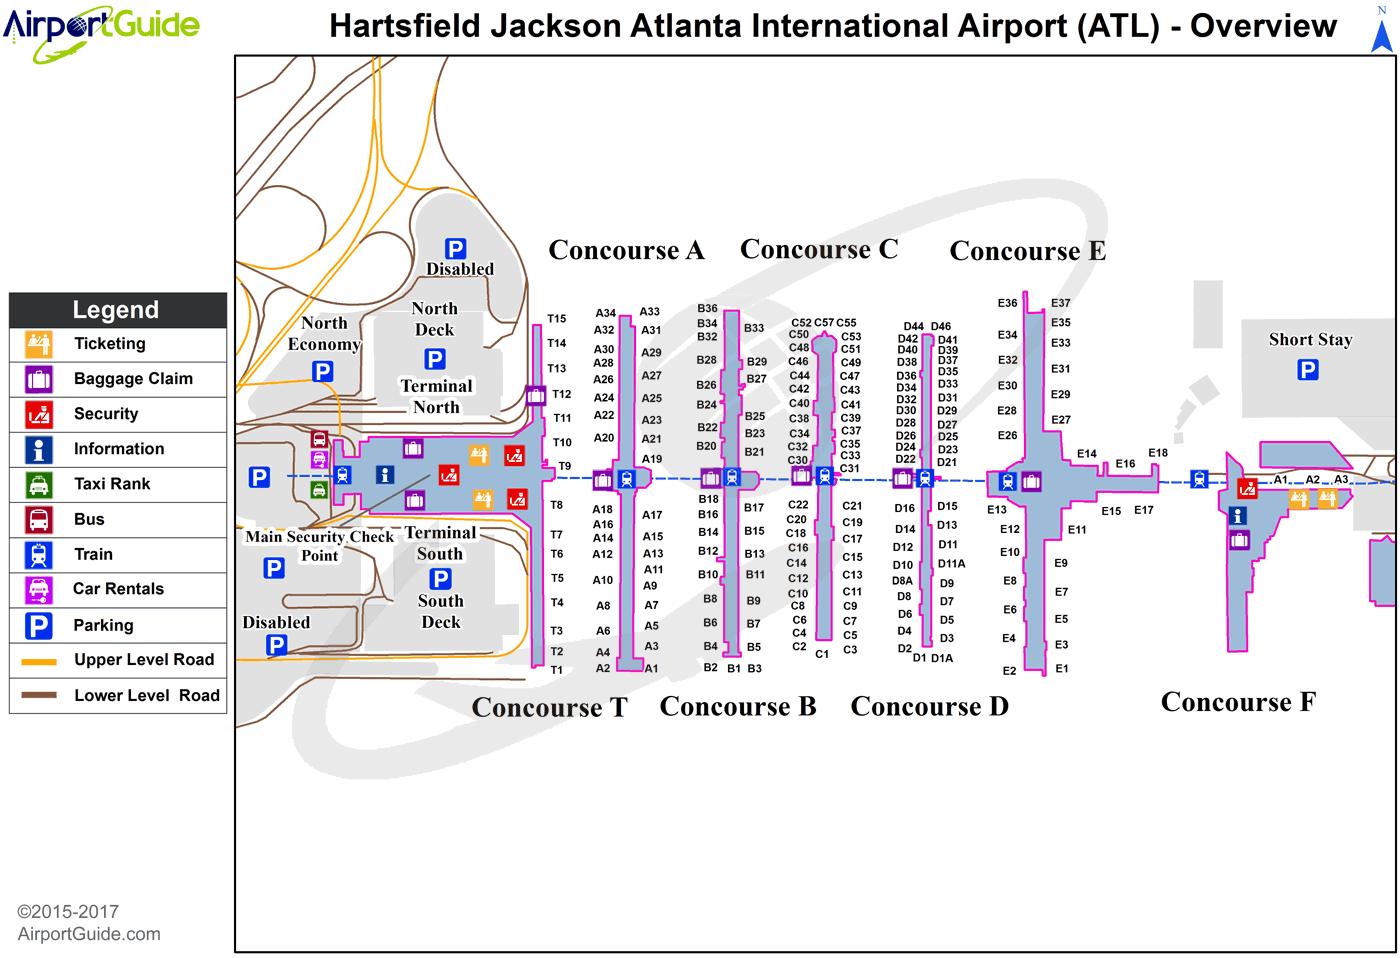 Map Of Atlanta Airport Airport Terminals And Airport Gates Of Atlanta